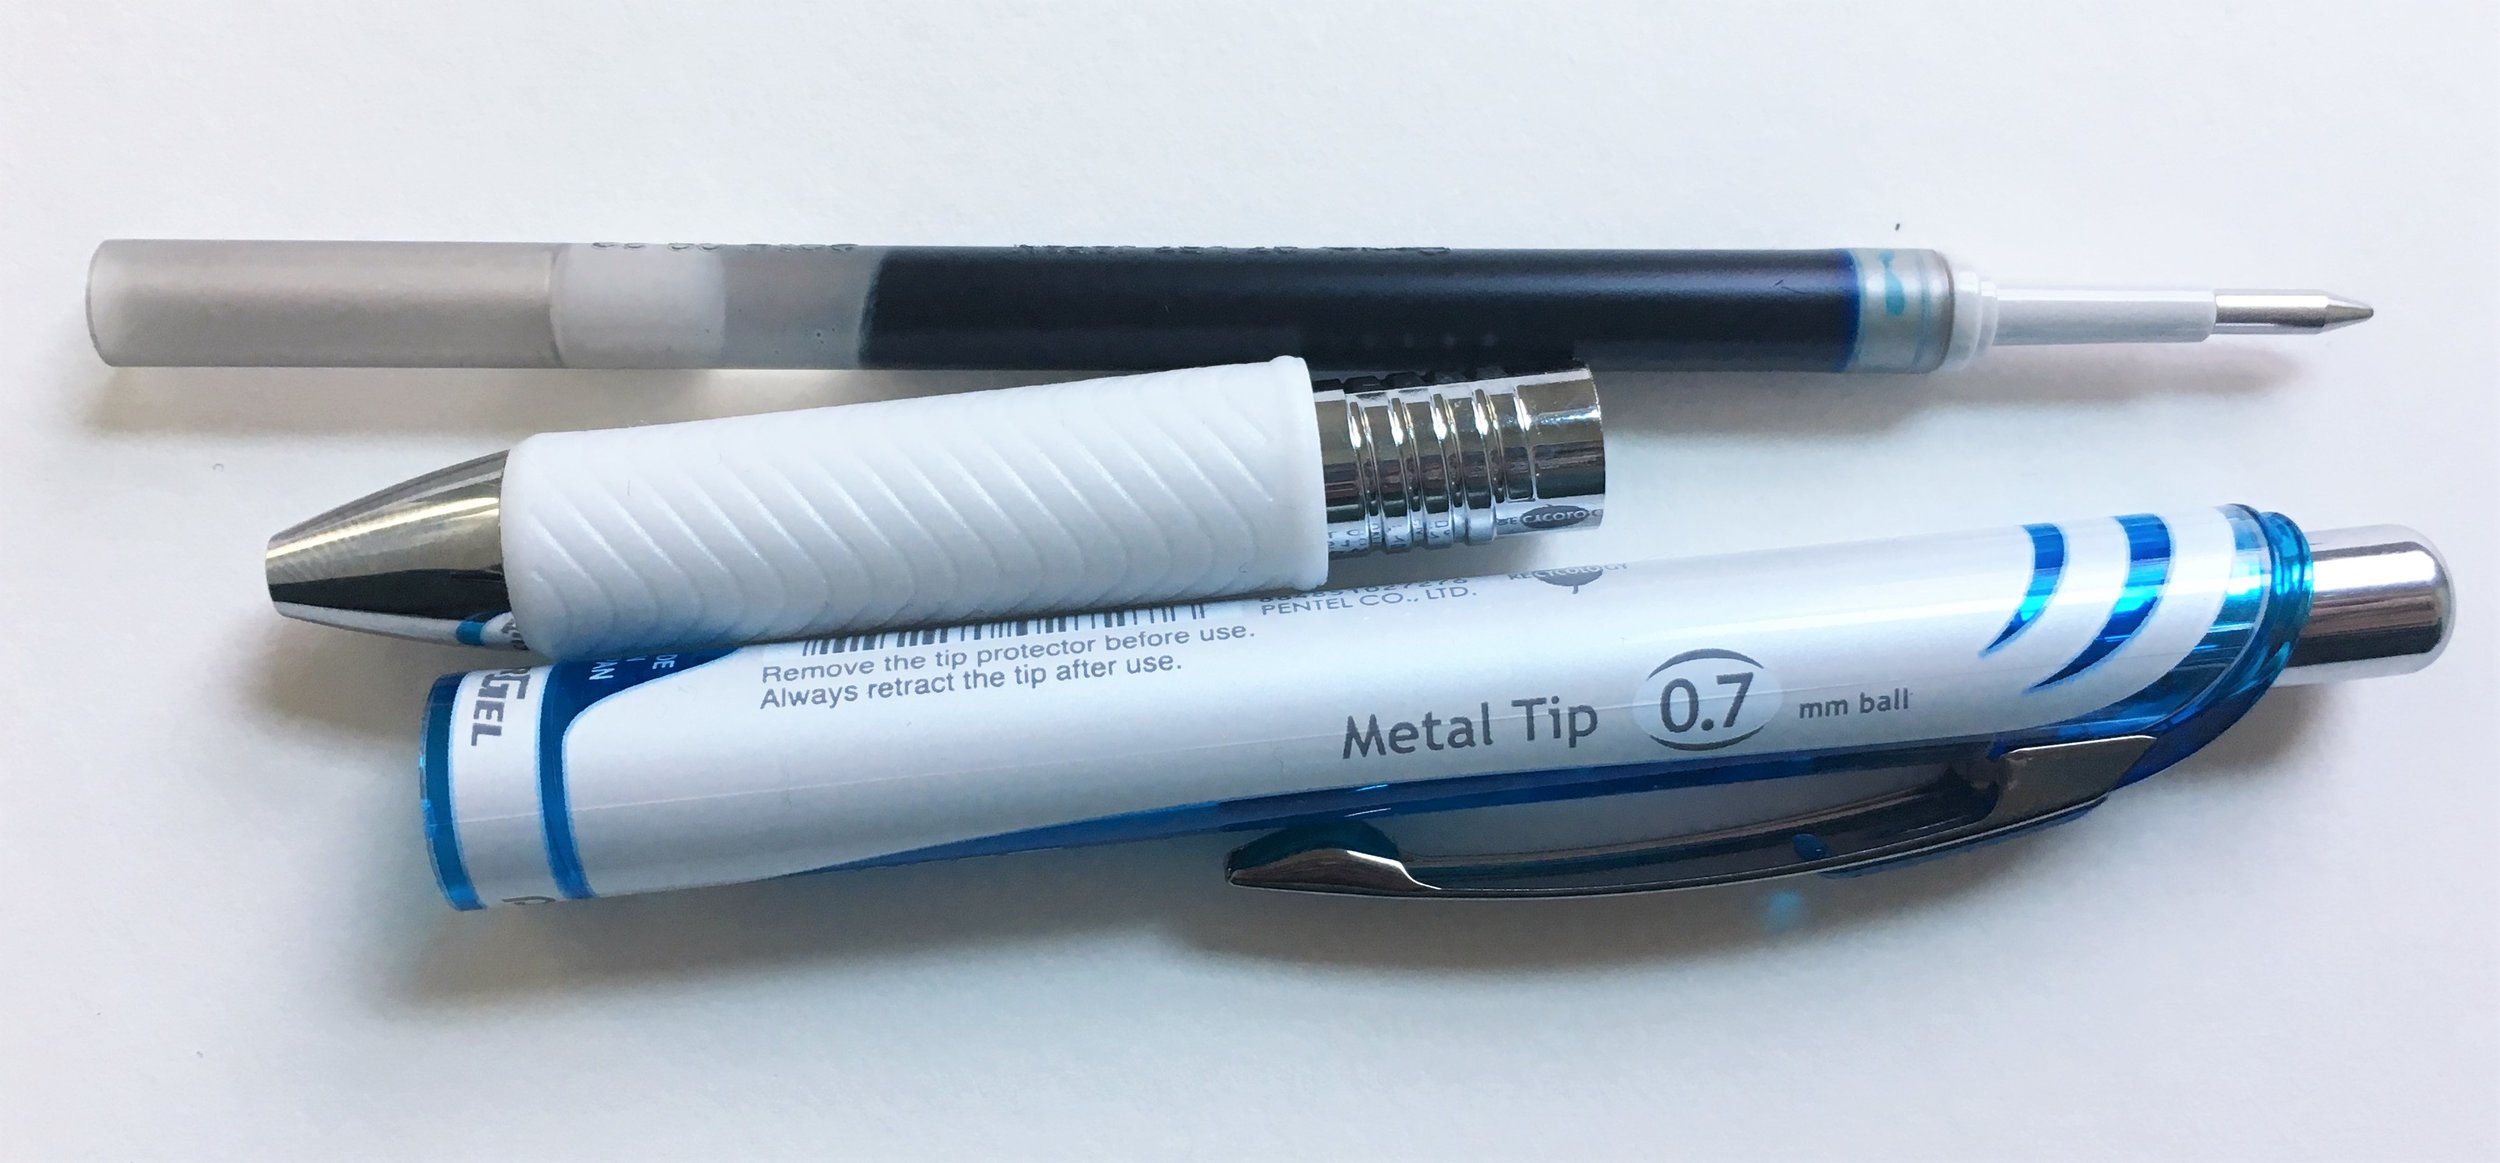 Pentel EnerGel Pearl 0.7 mm Gel Pen Review — The Pen Addict